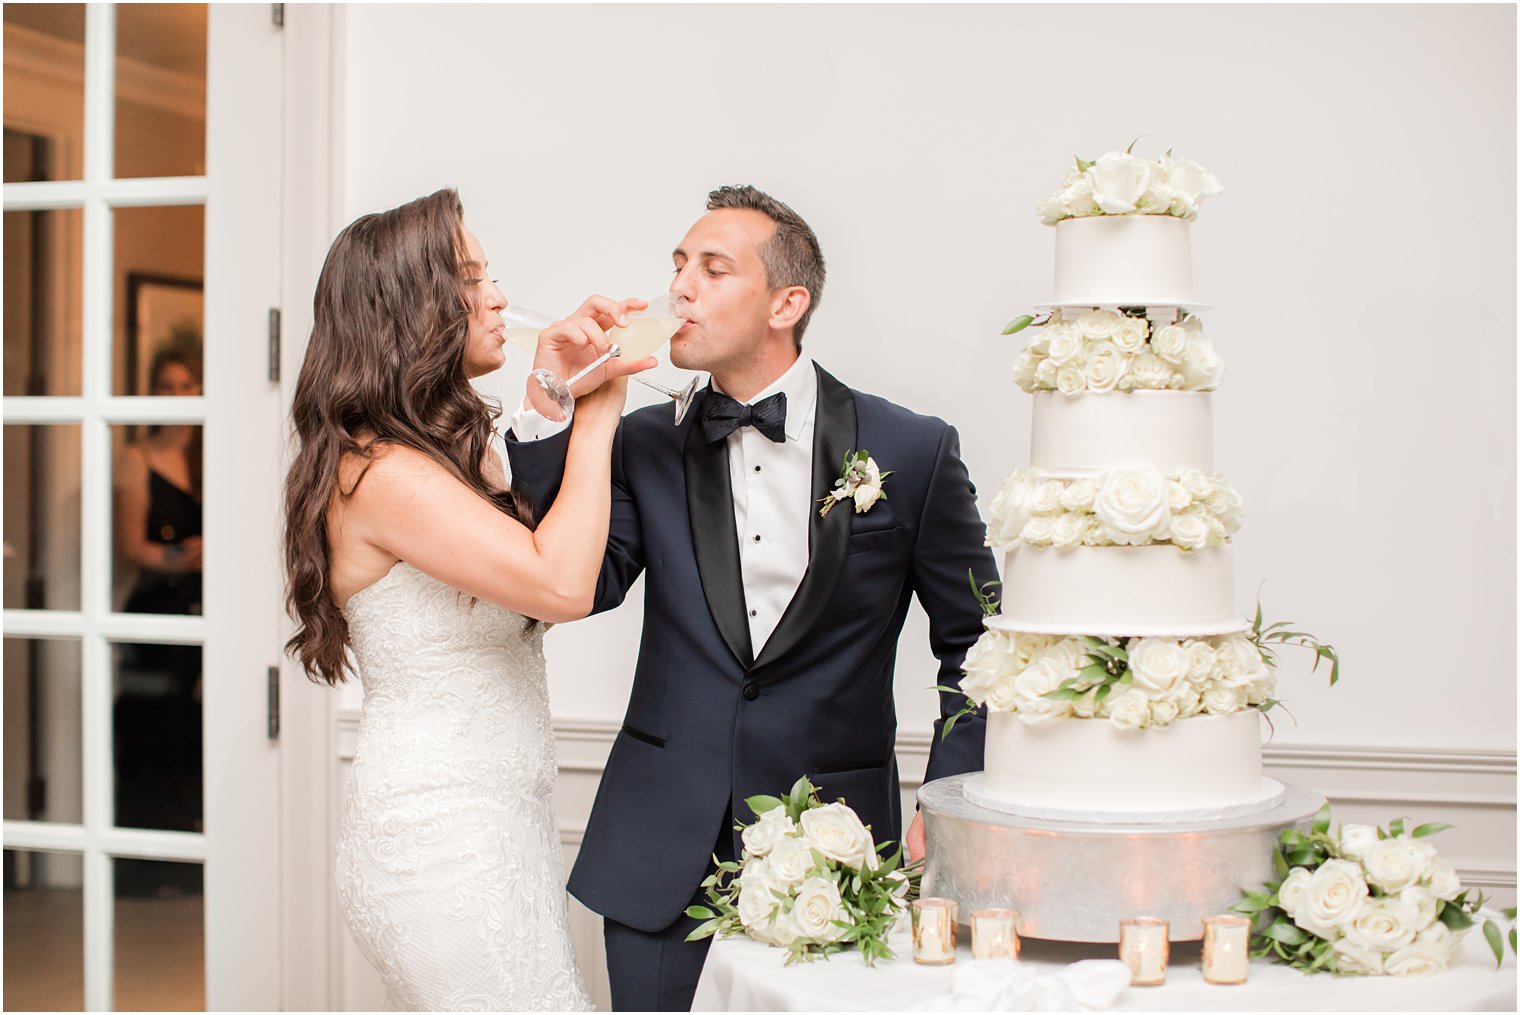 newlyweds cut wedding cake in Navesink Country Club